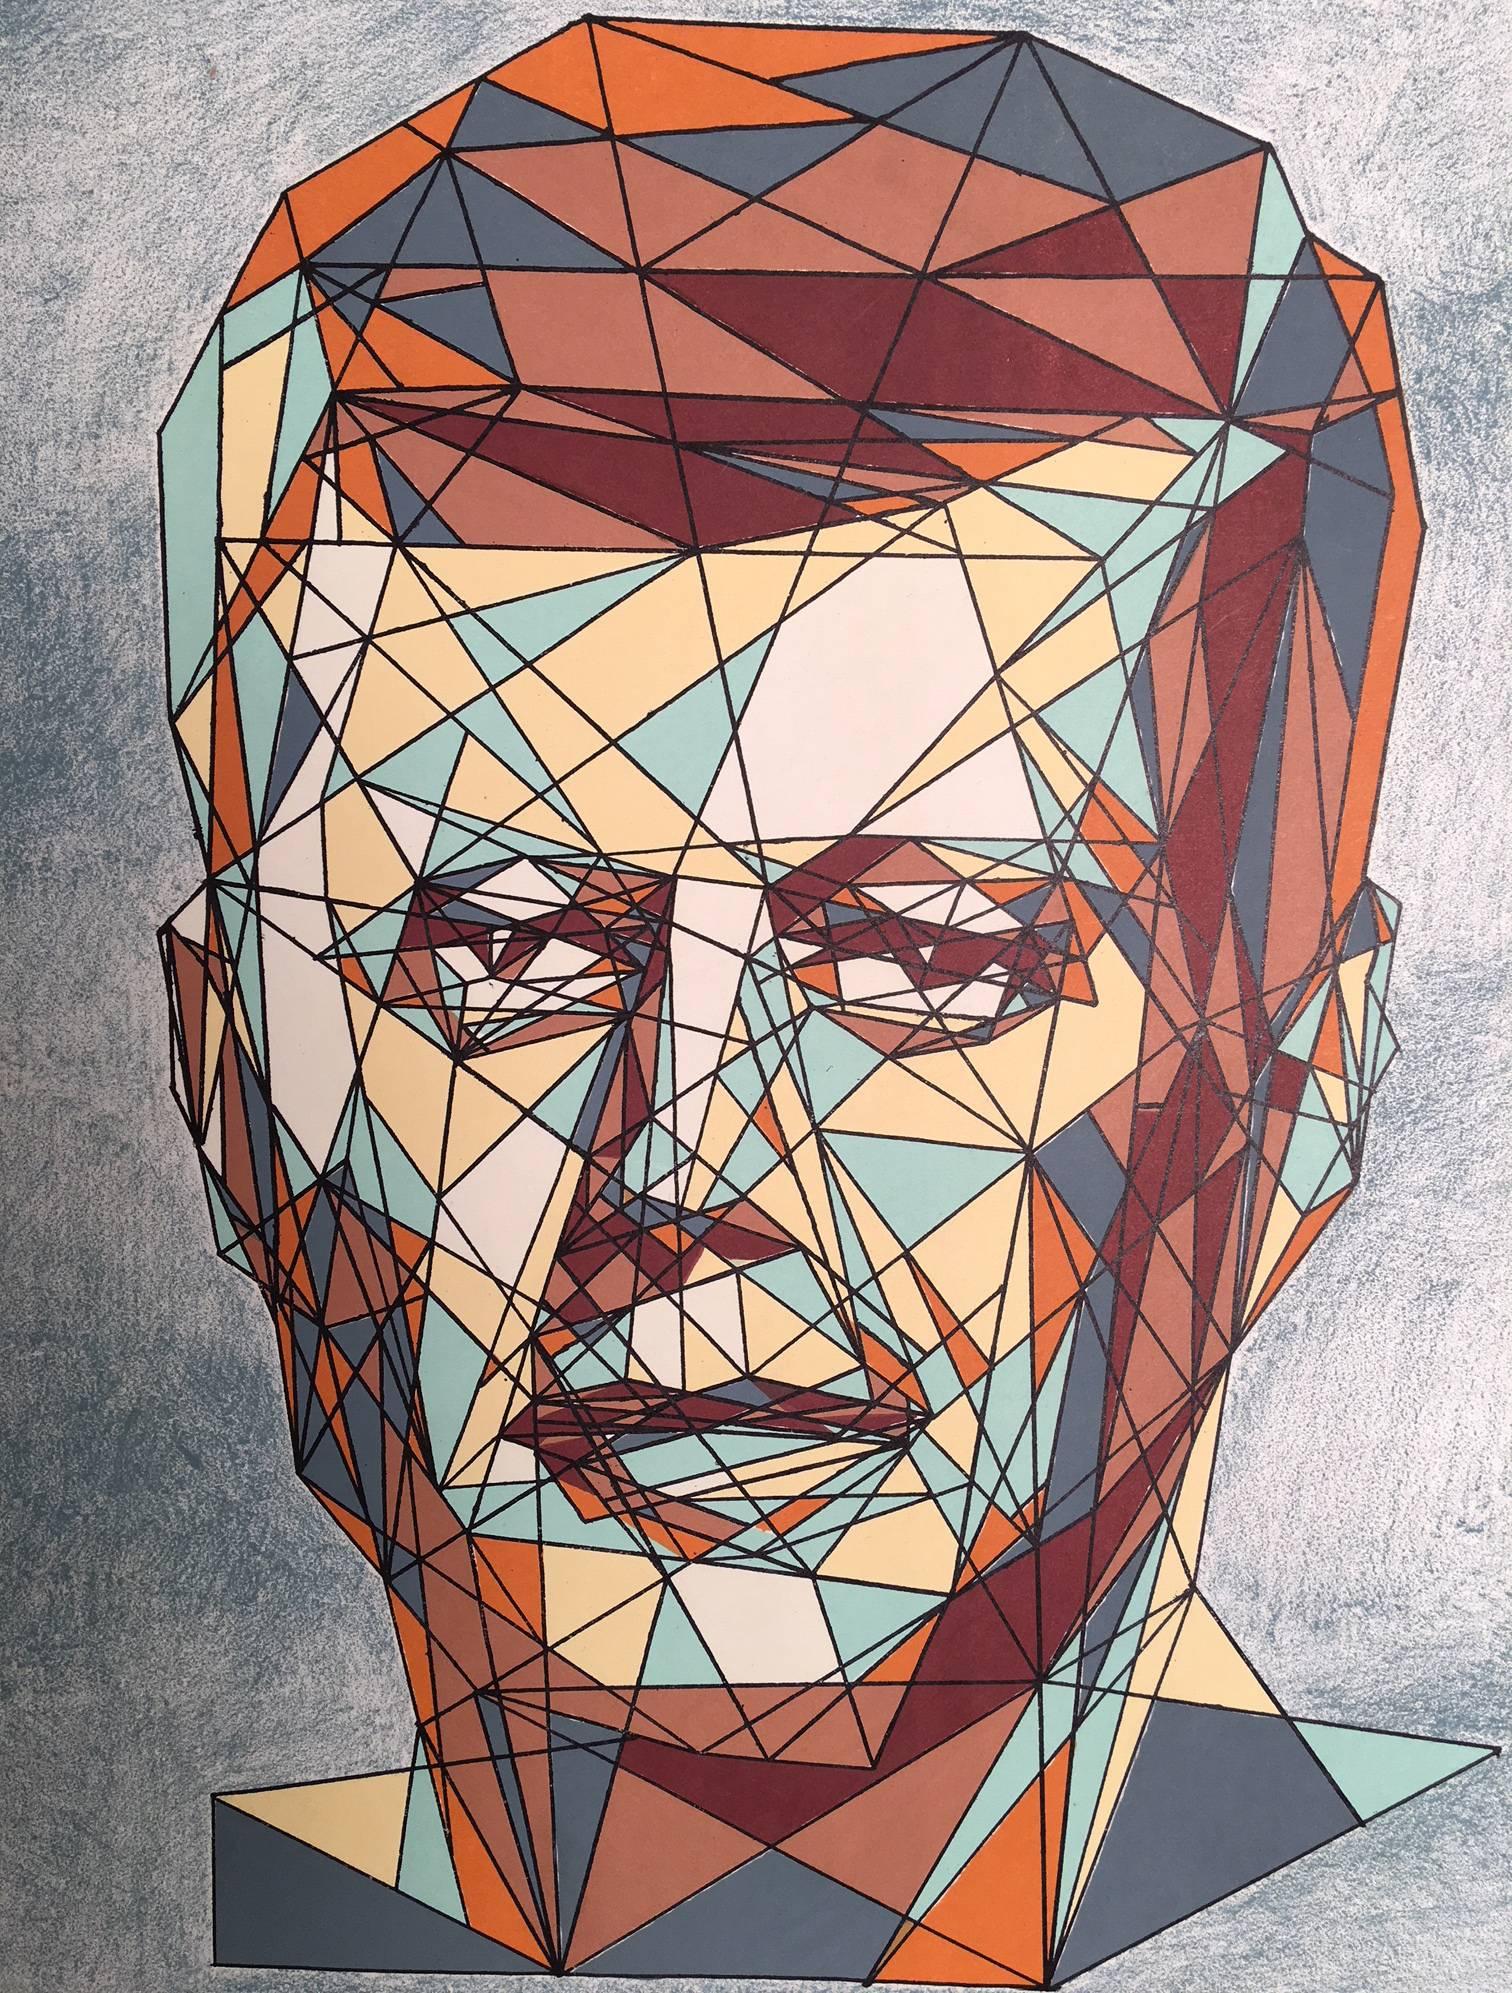 John F. Kennedy Cubist Portrait - Print by Unknown